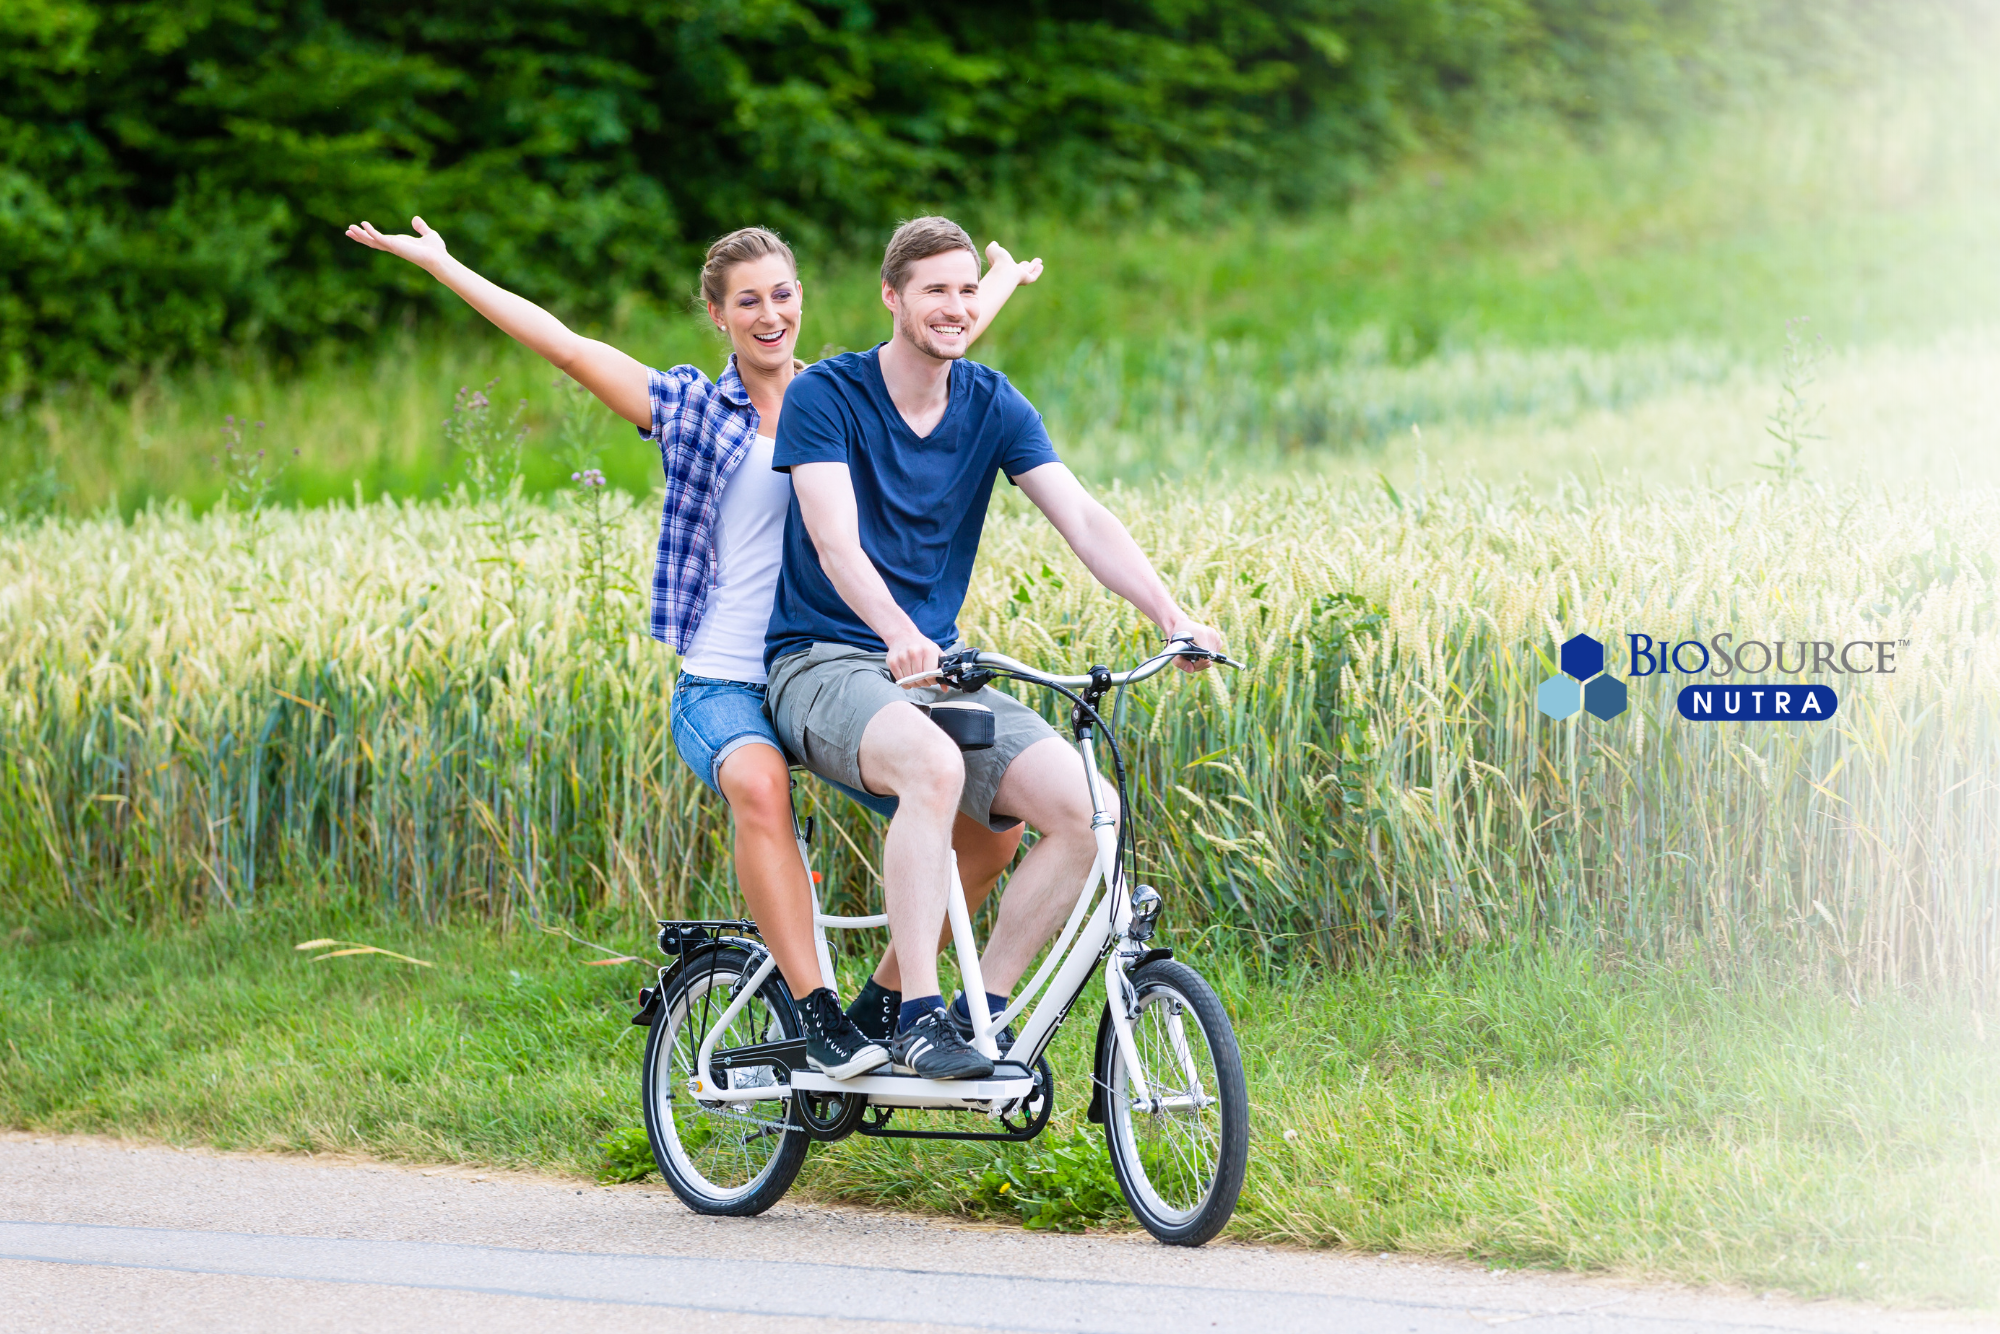 A young couple enjoys a bike ride